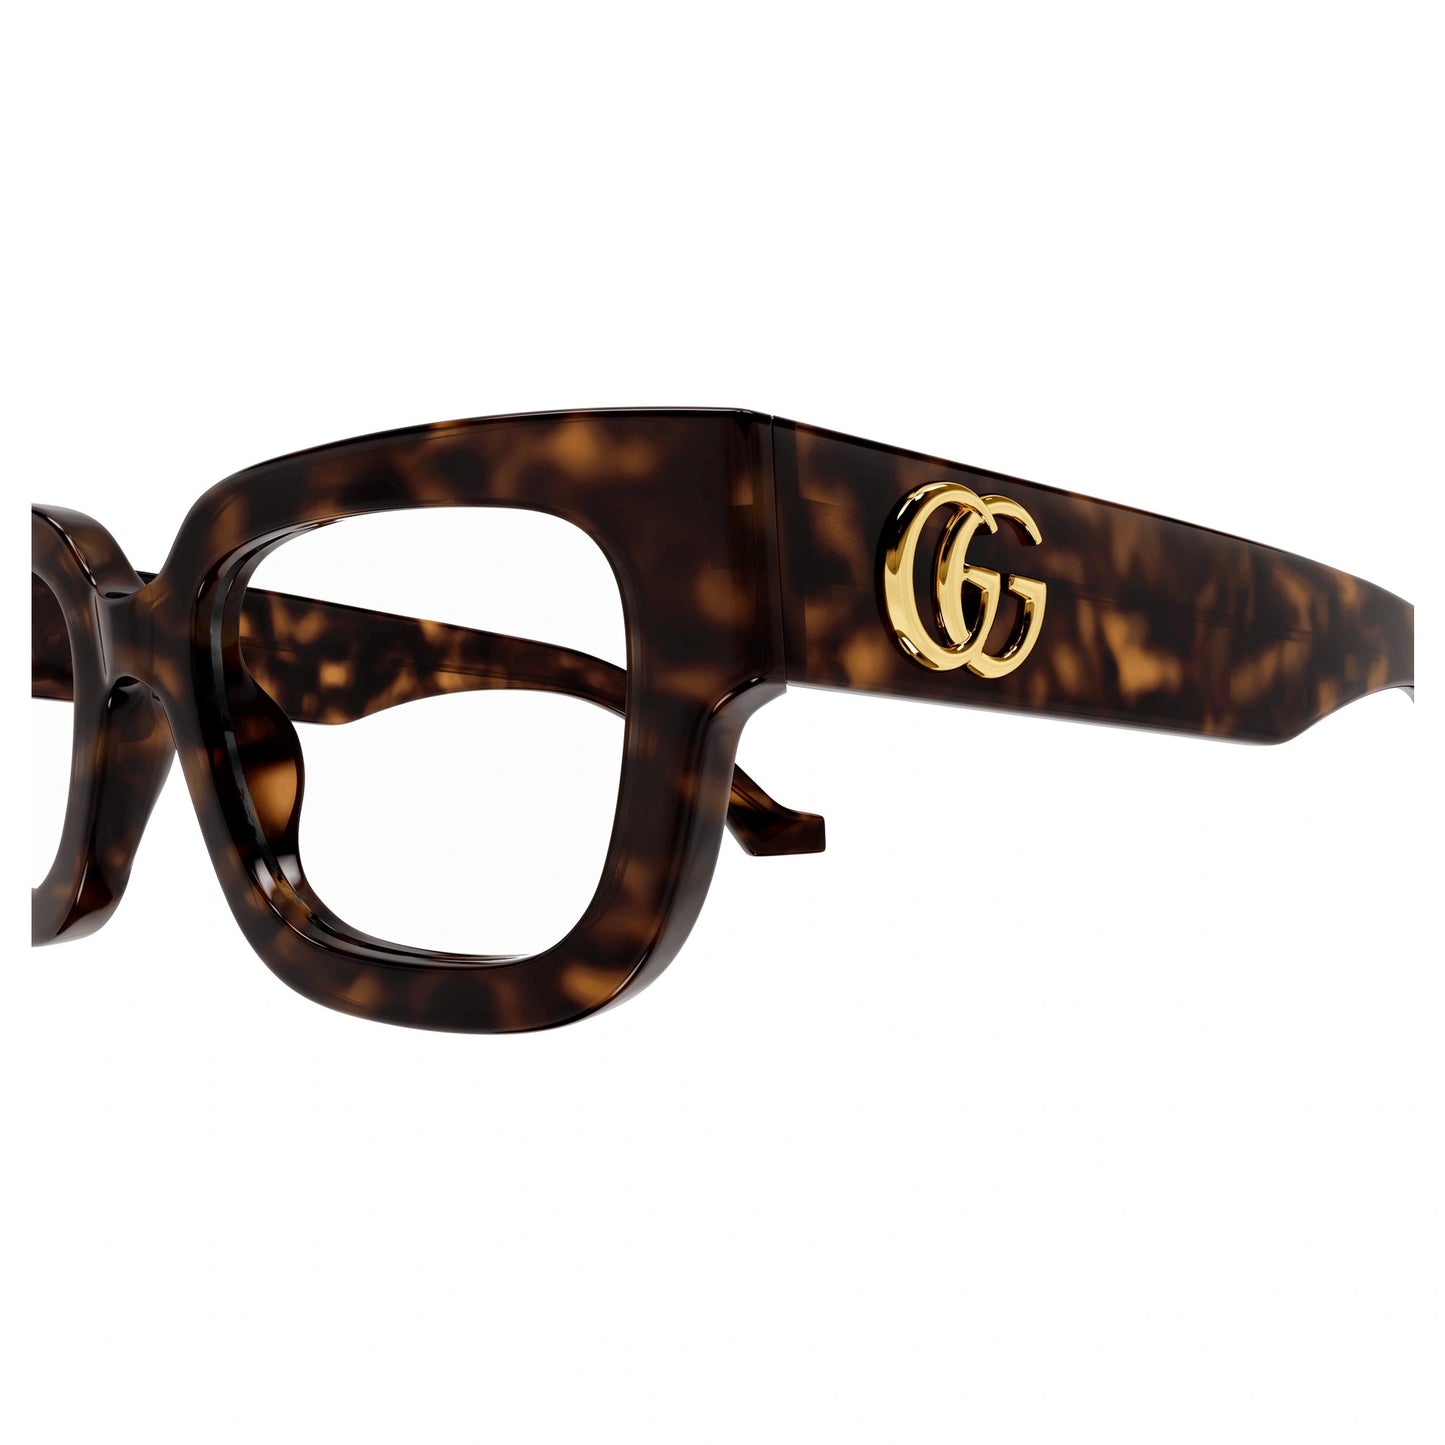 Gucci GG1548o-002 50mm New Eyeglasses